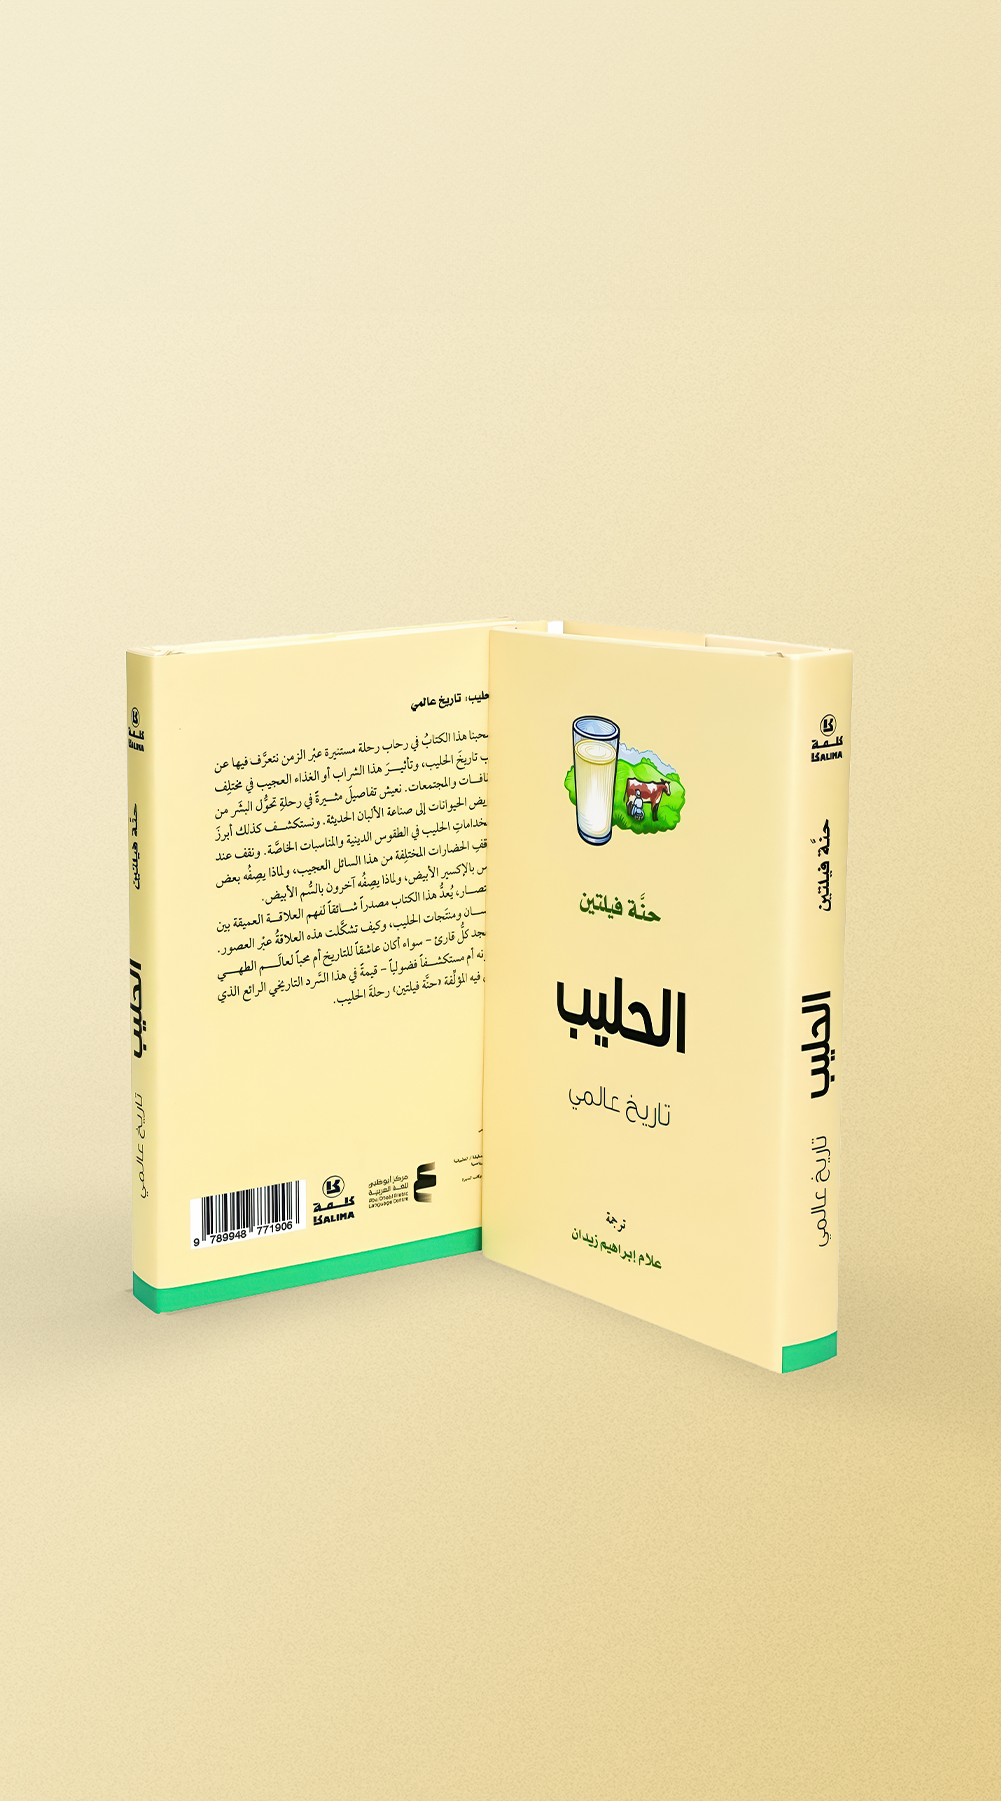 Abu Dhabi Arabic Language Centre Issues Arabic Edition of “Milk: A Global History”